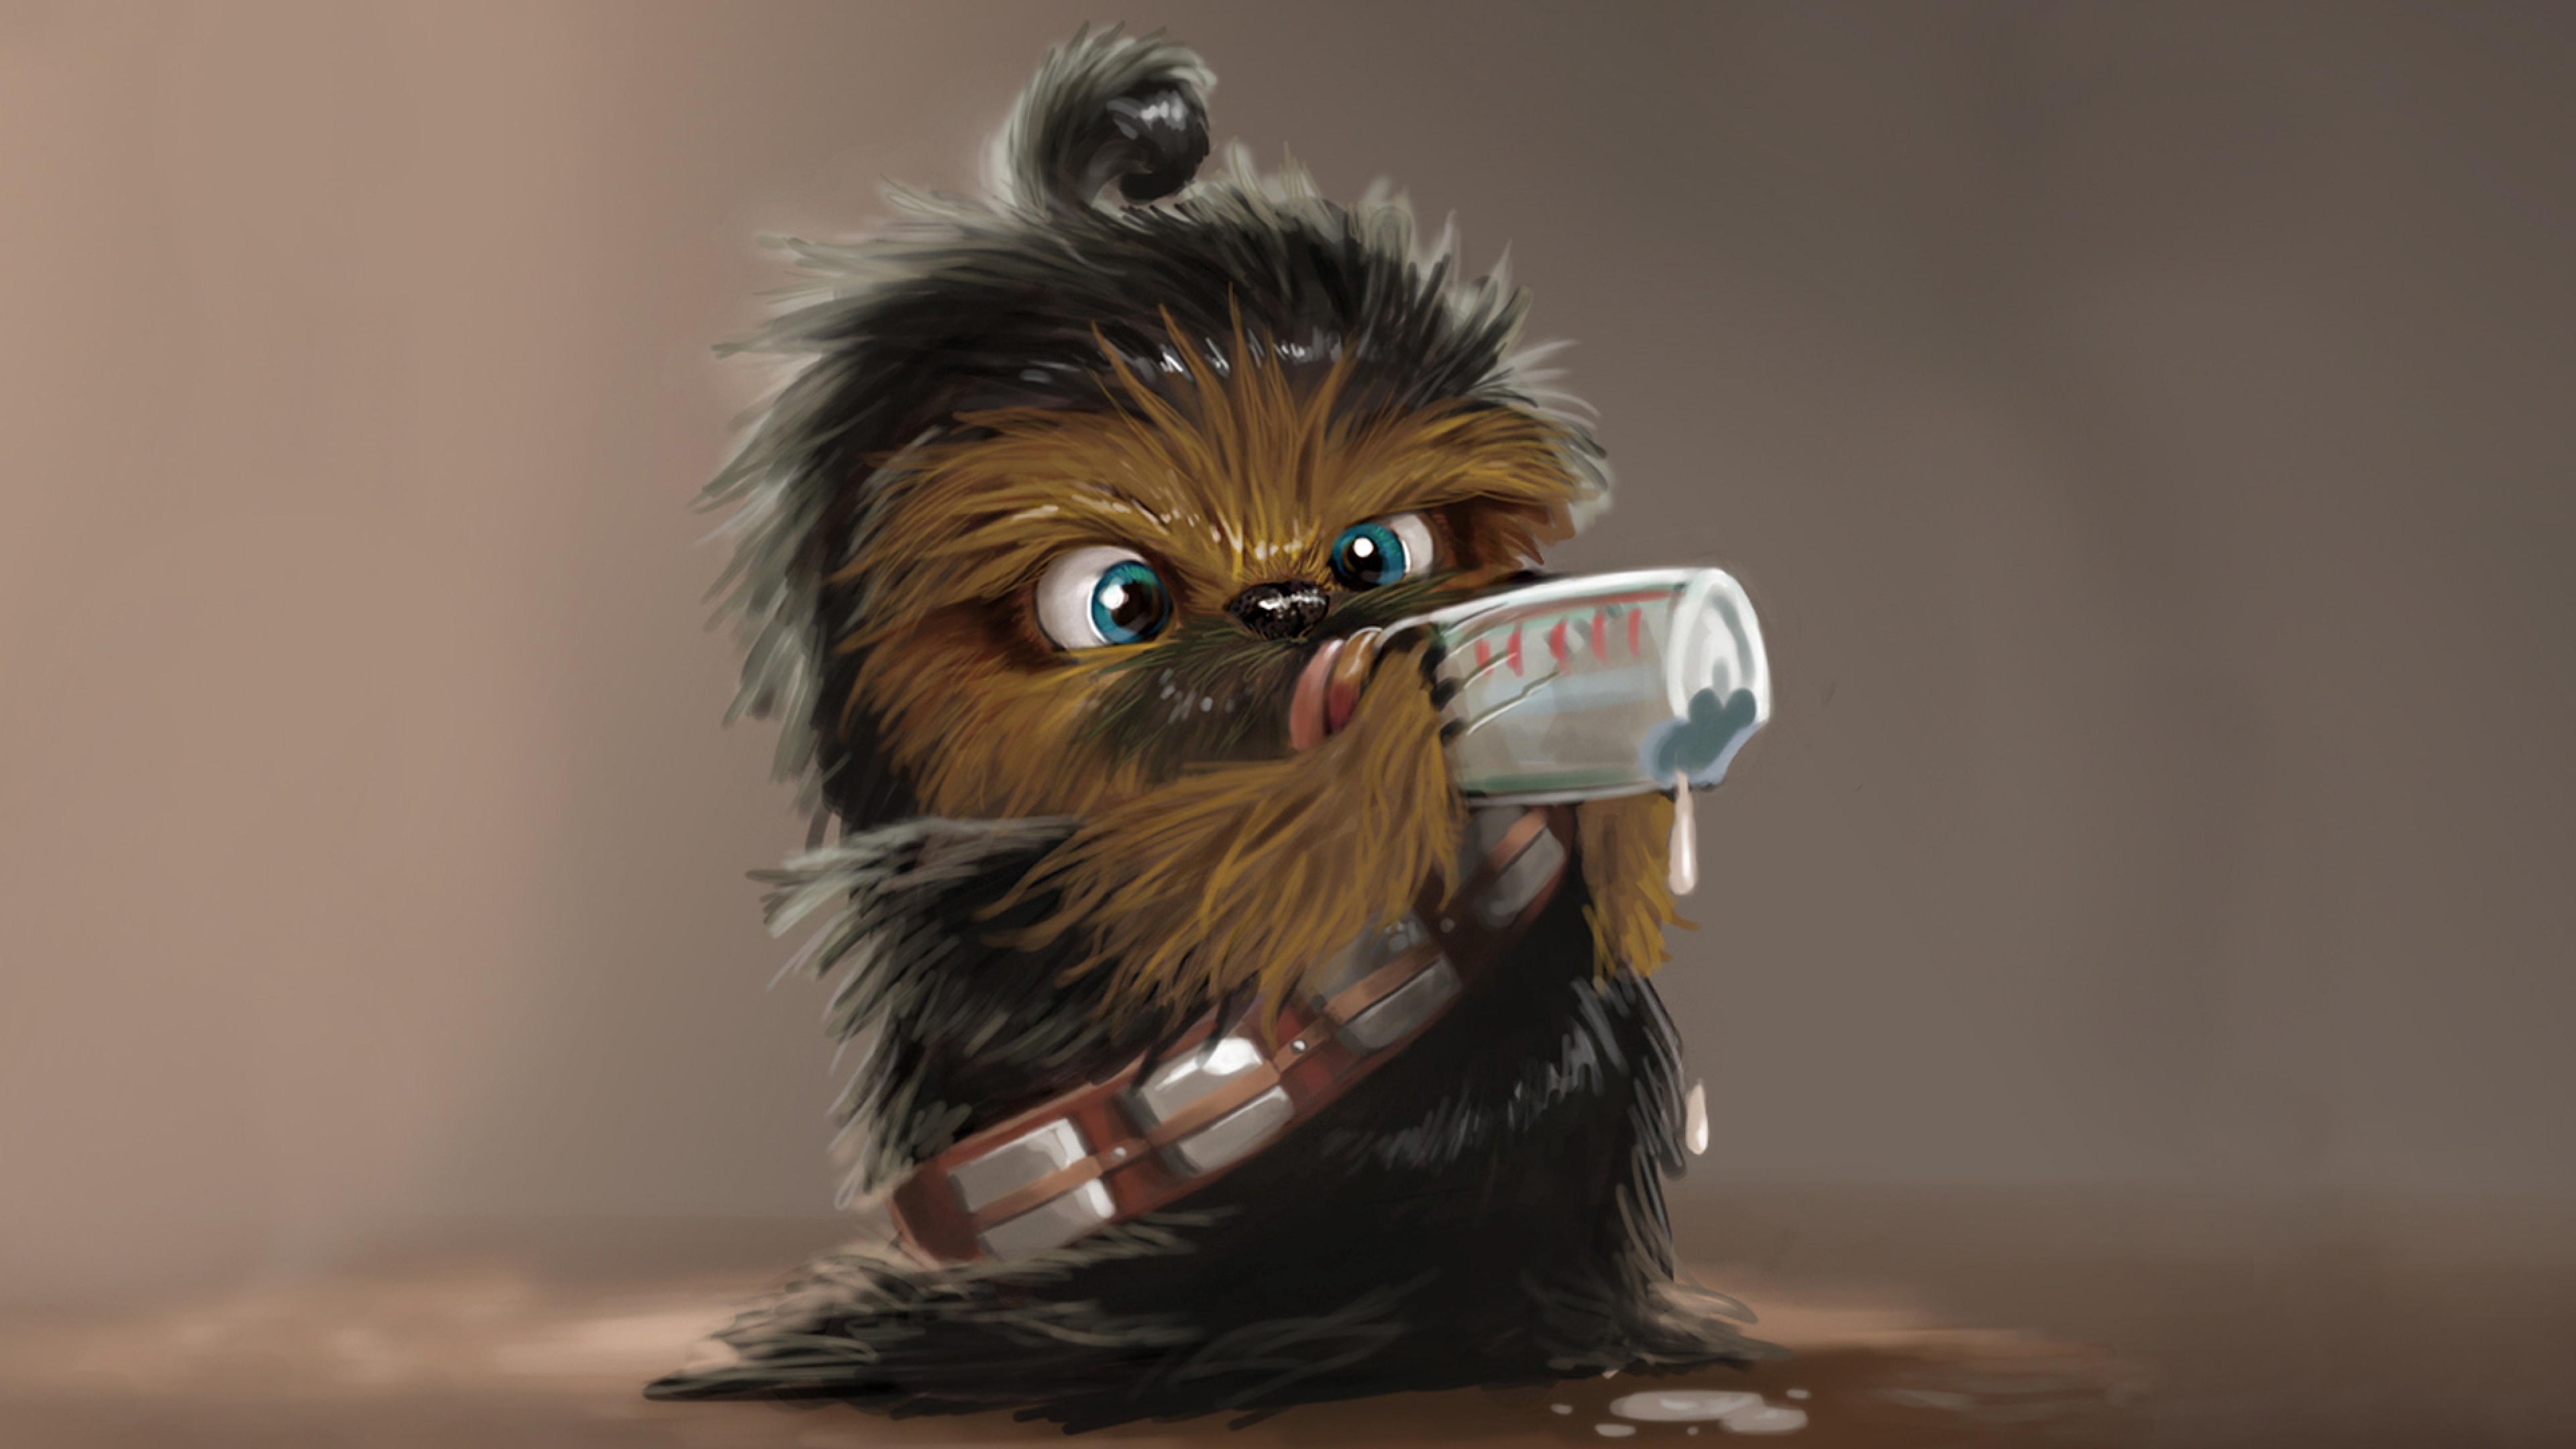 Star Wars Chewbacca Drink Baby Wallpaper Background 4k Ultra HD